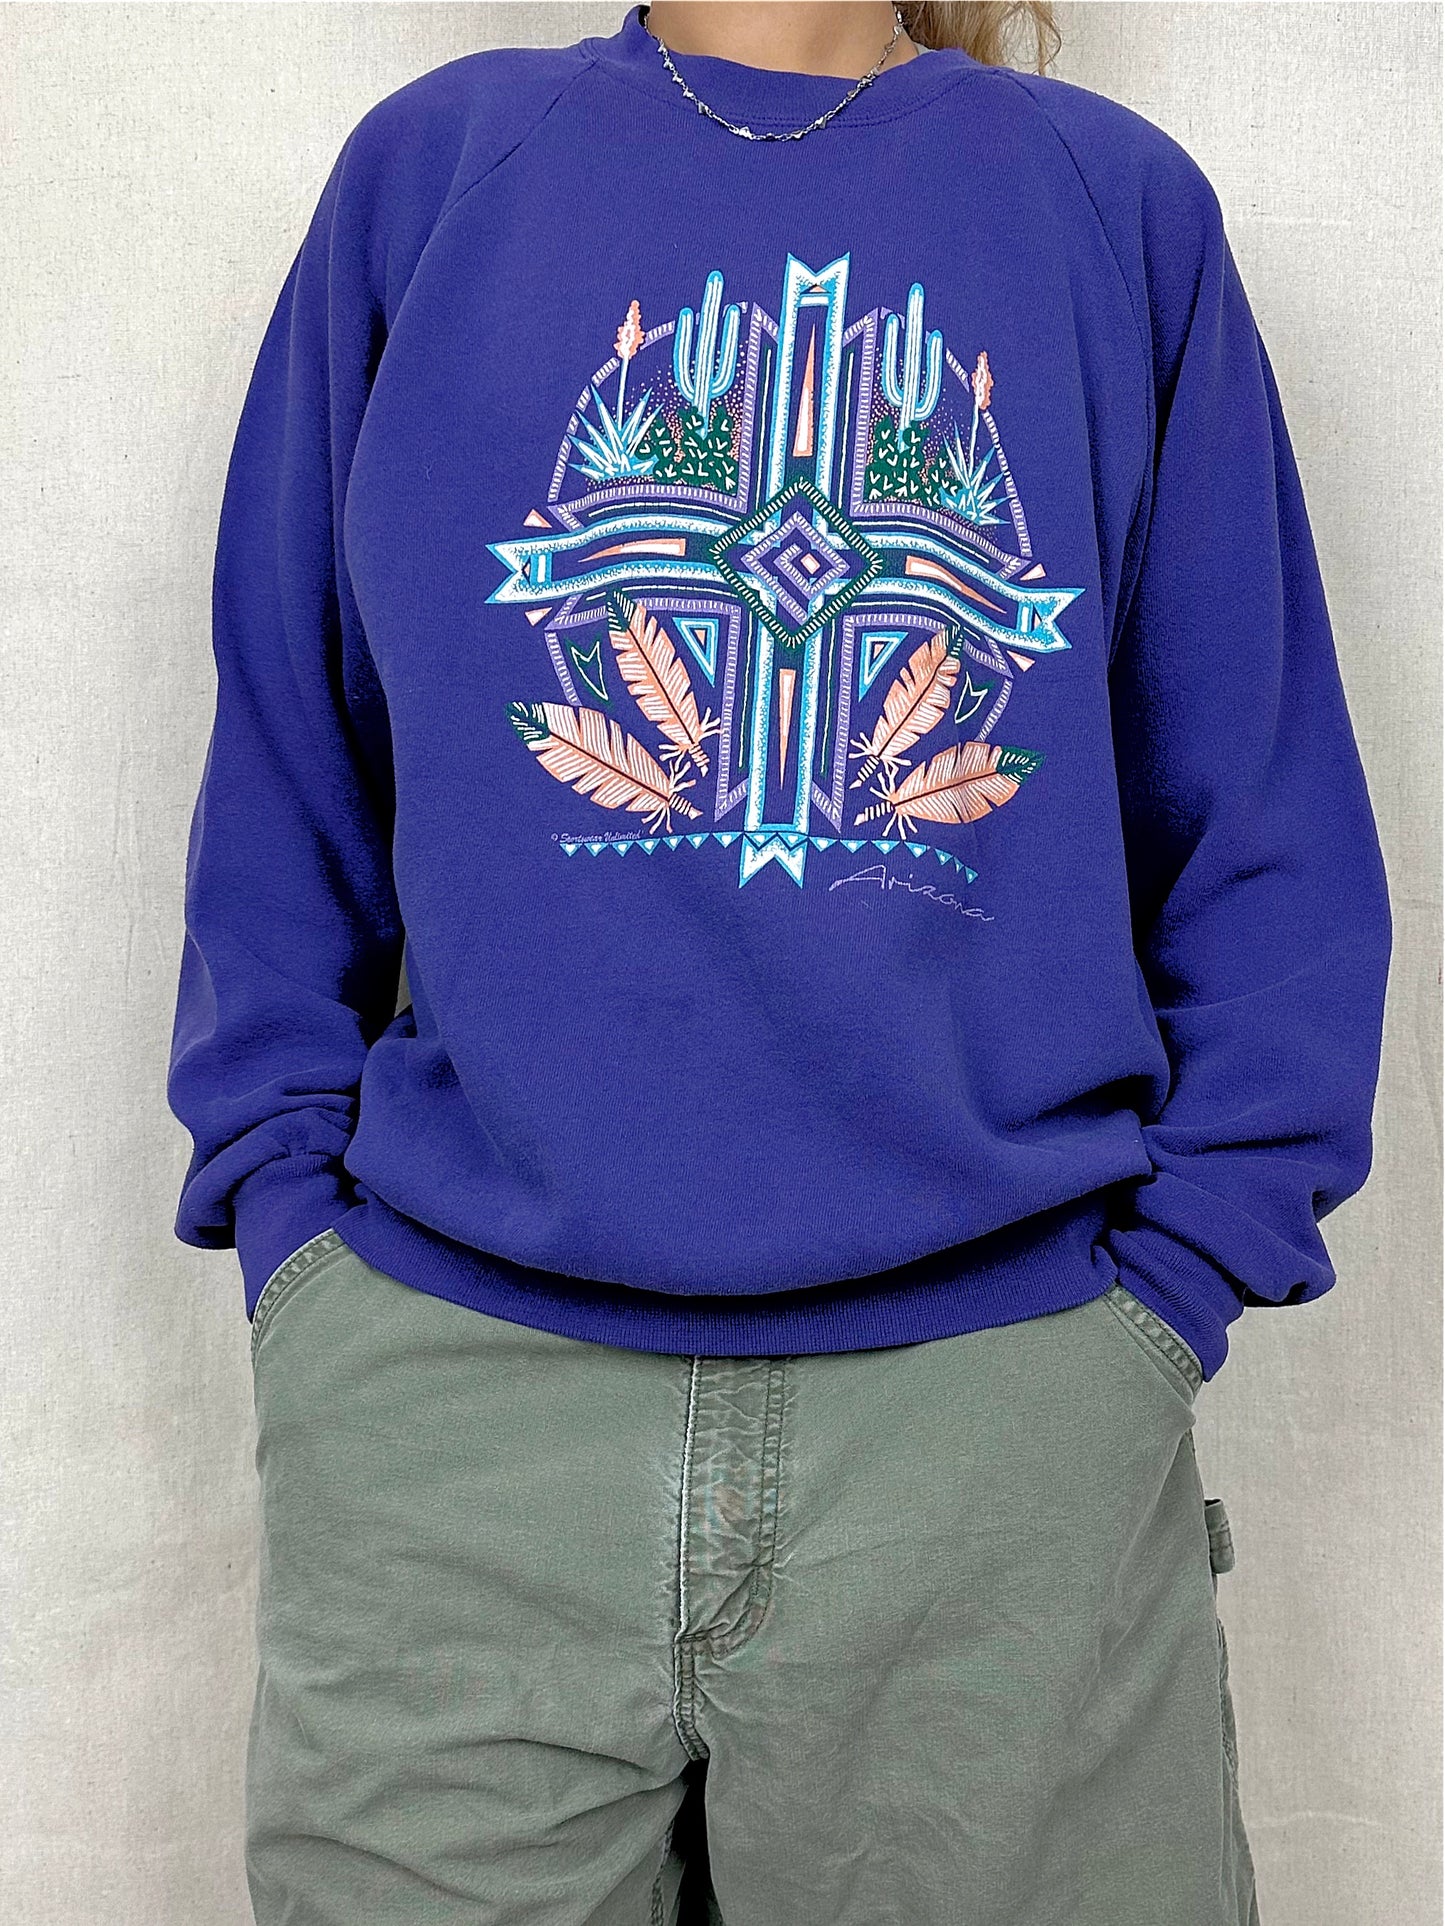 90's Arizona USA Made Vintage Sweatshirt Size 12